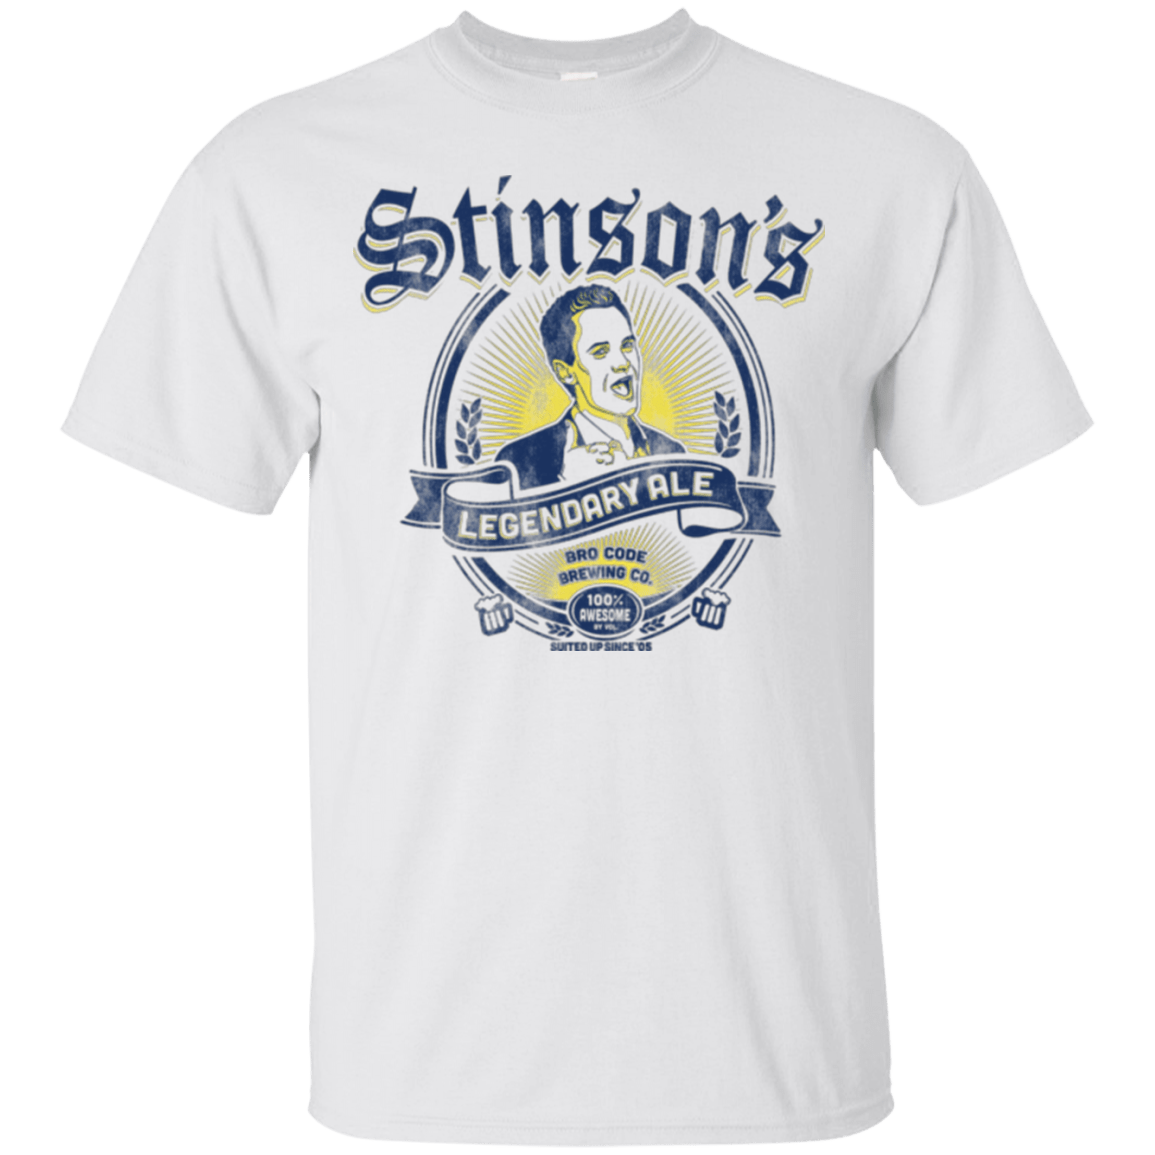 T-Shirts White / Small Stinsons Legendary Ale T-Shirt